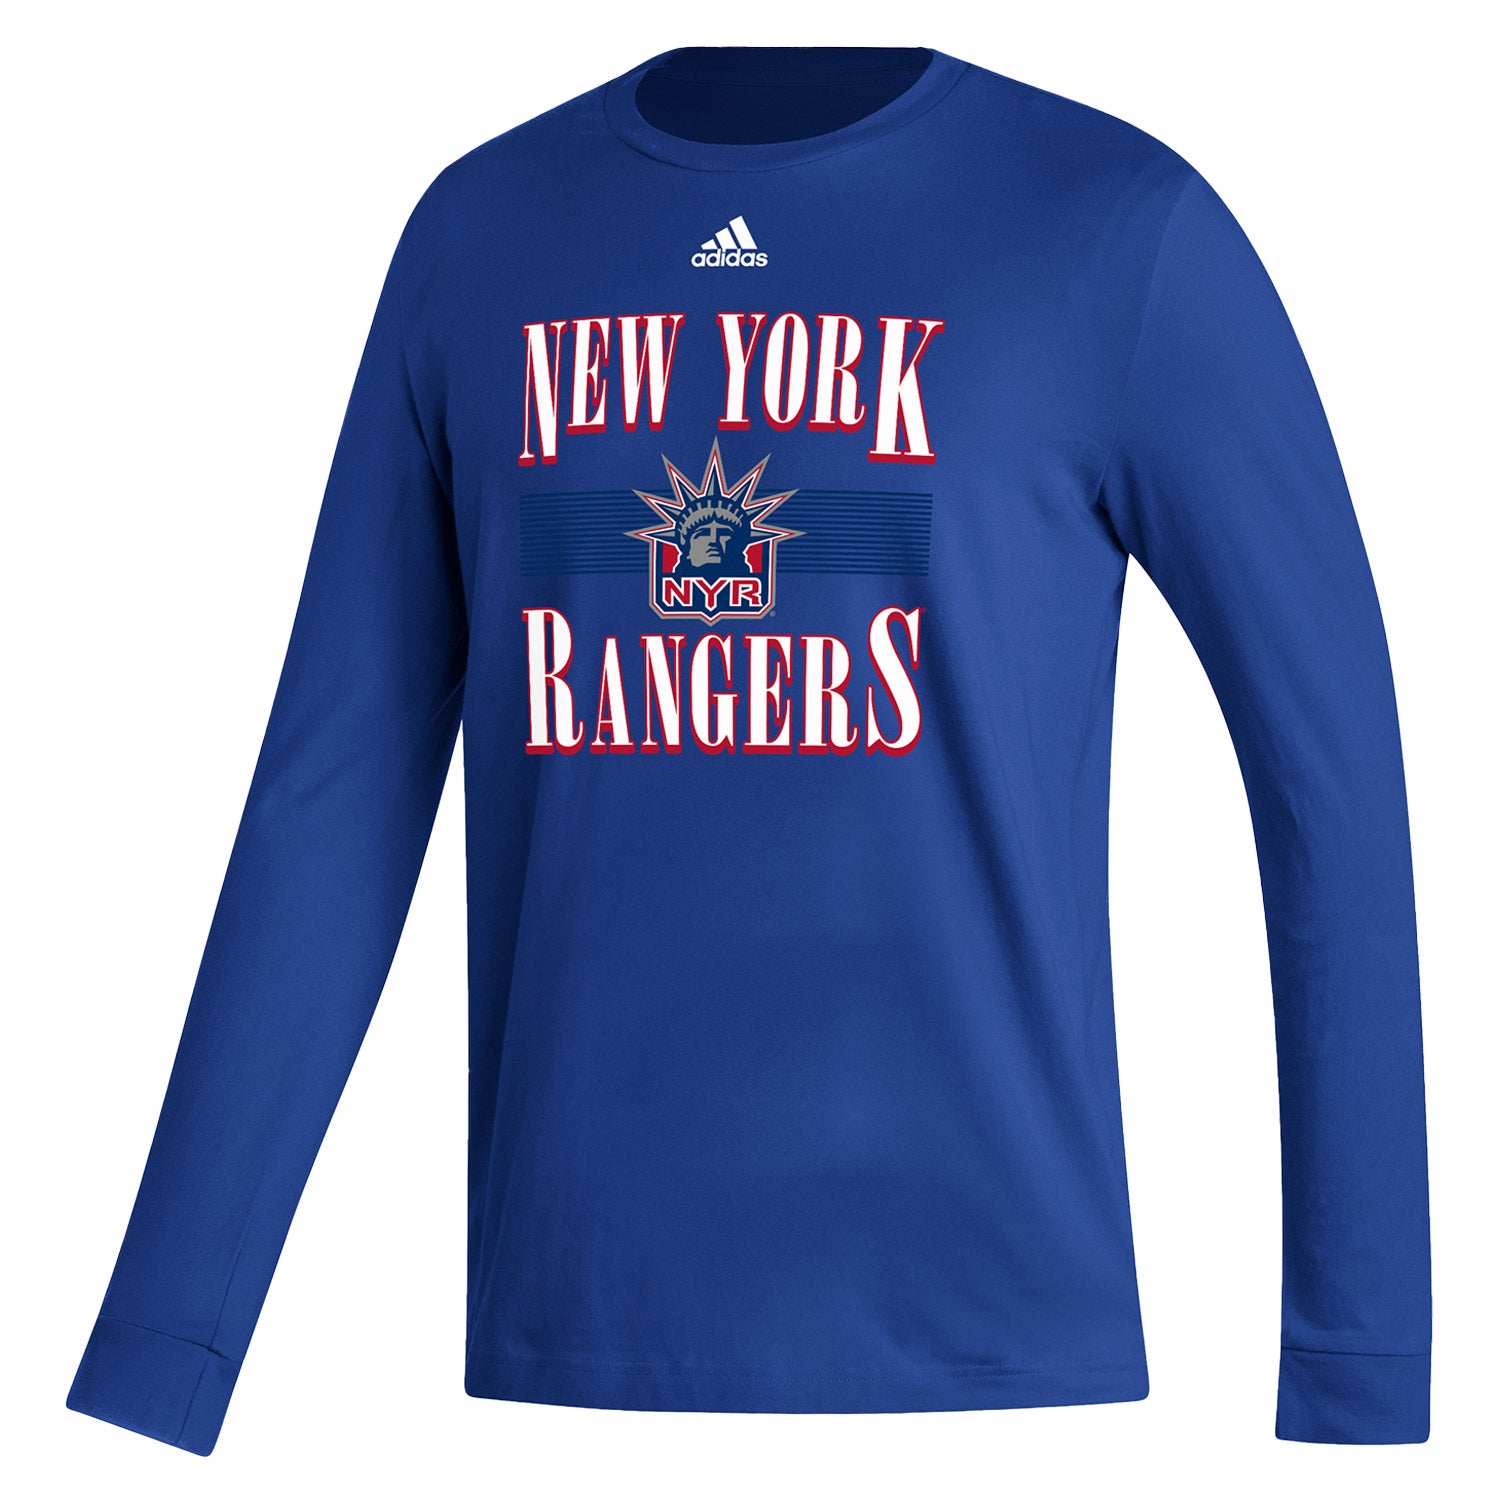 adidas, Shirts & Tops, New York Rangers Long Sleeve Shirt